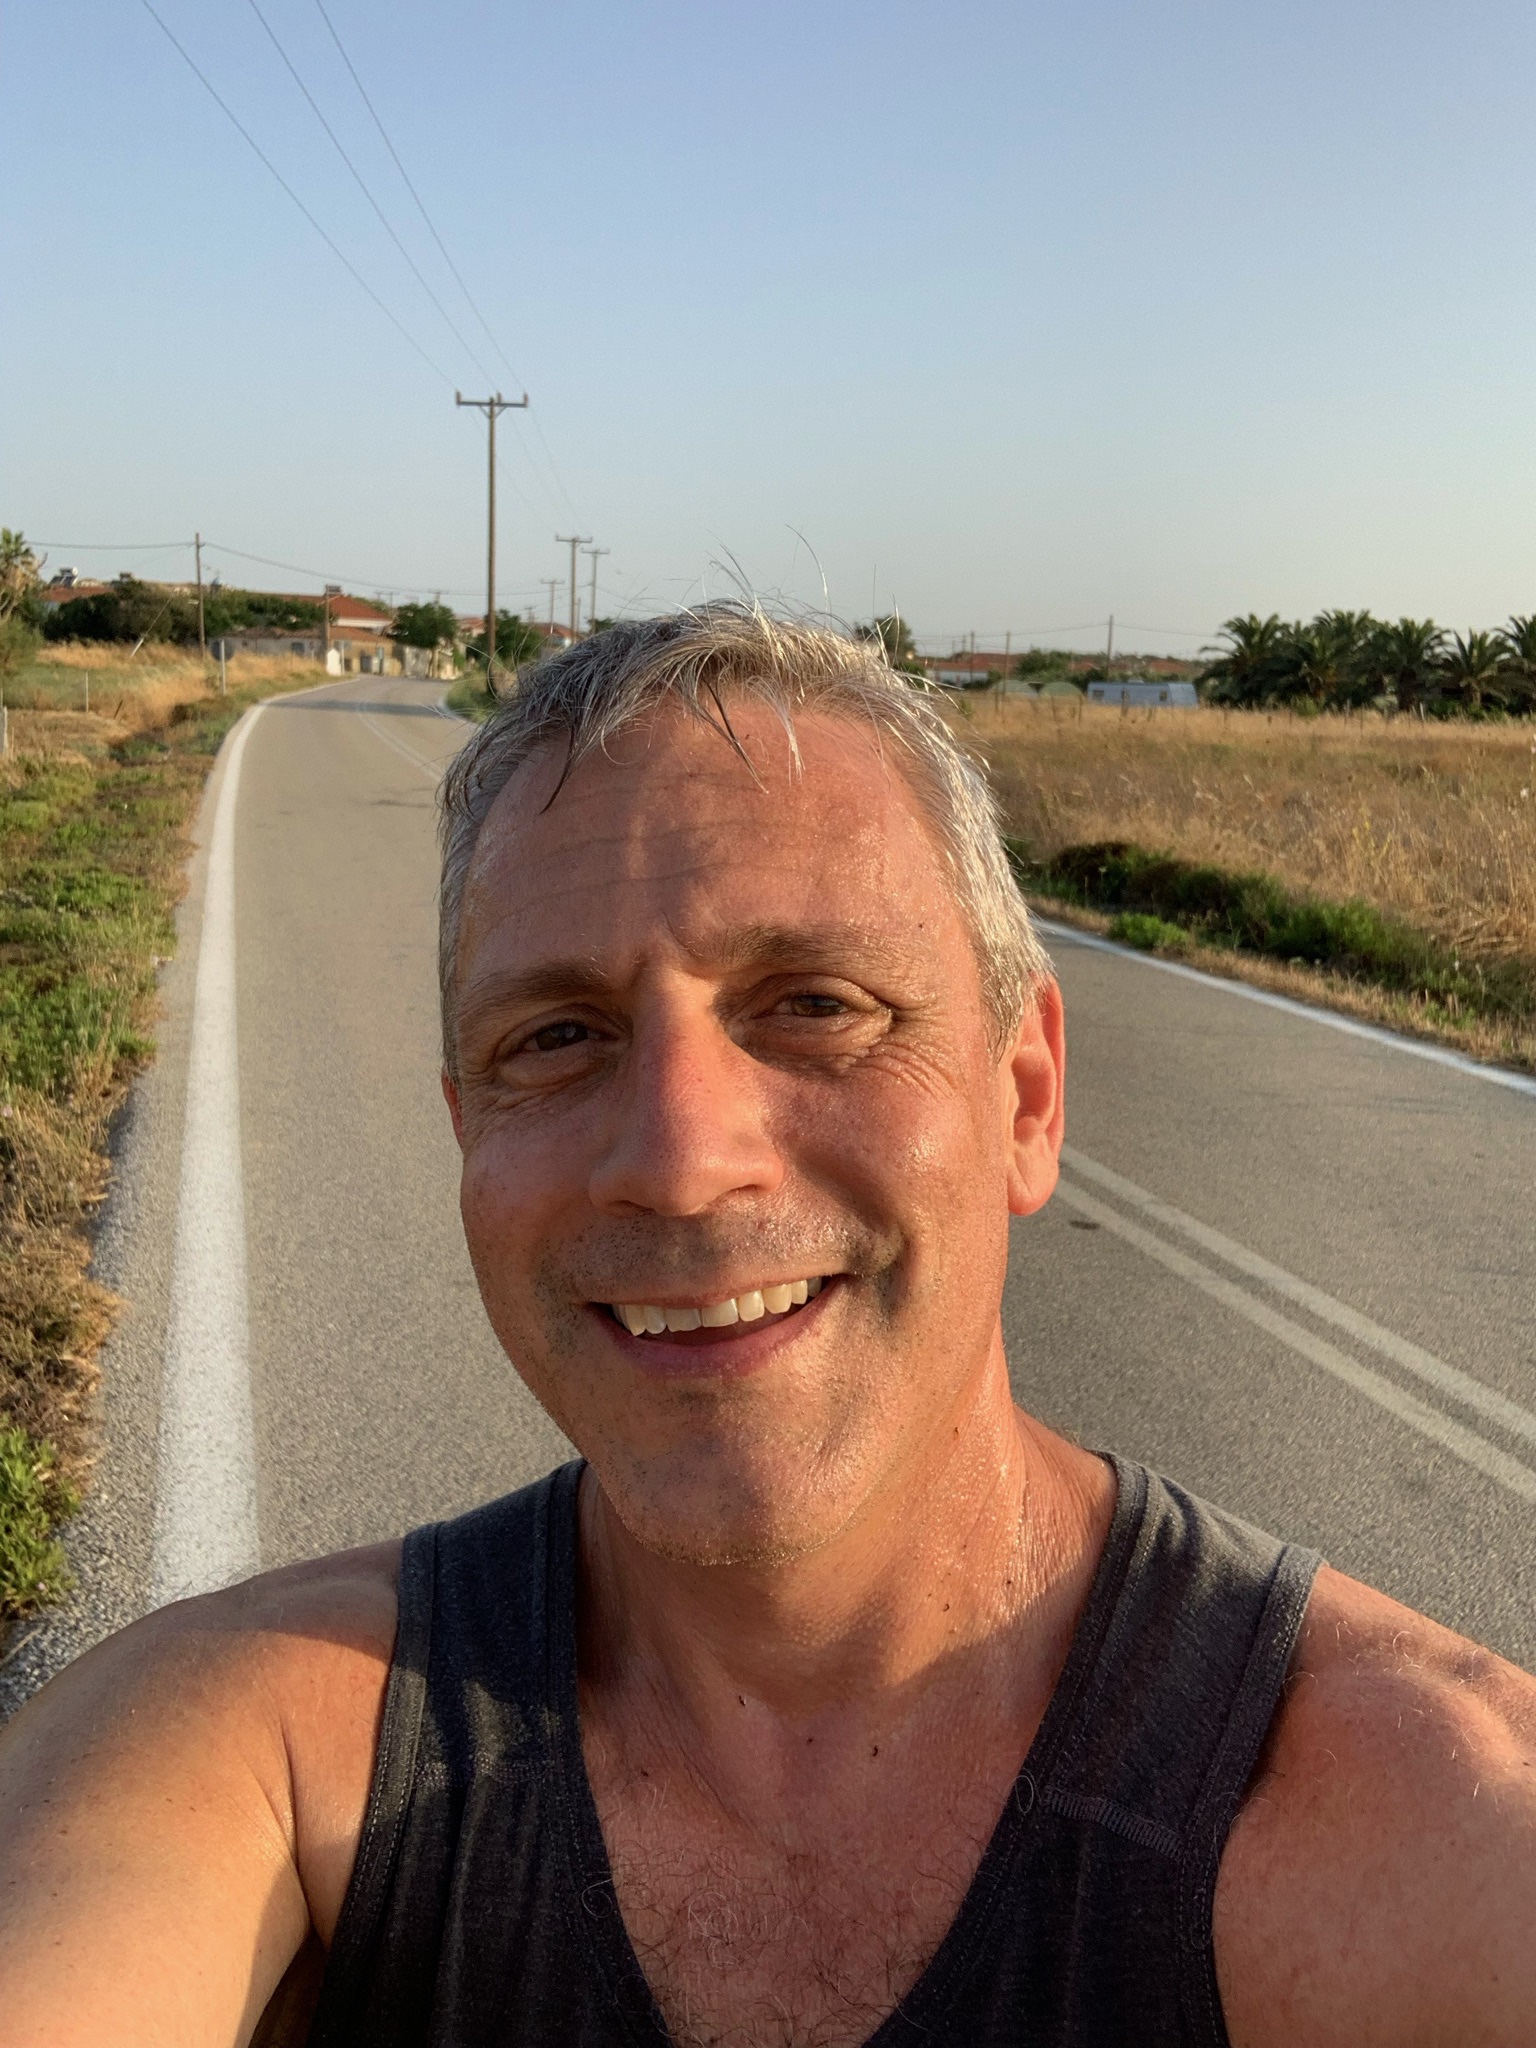 Running in Greece